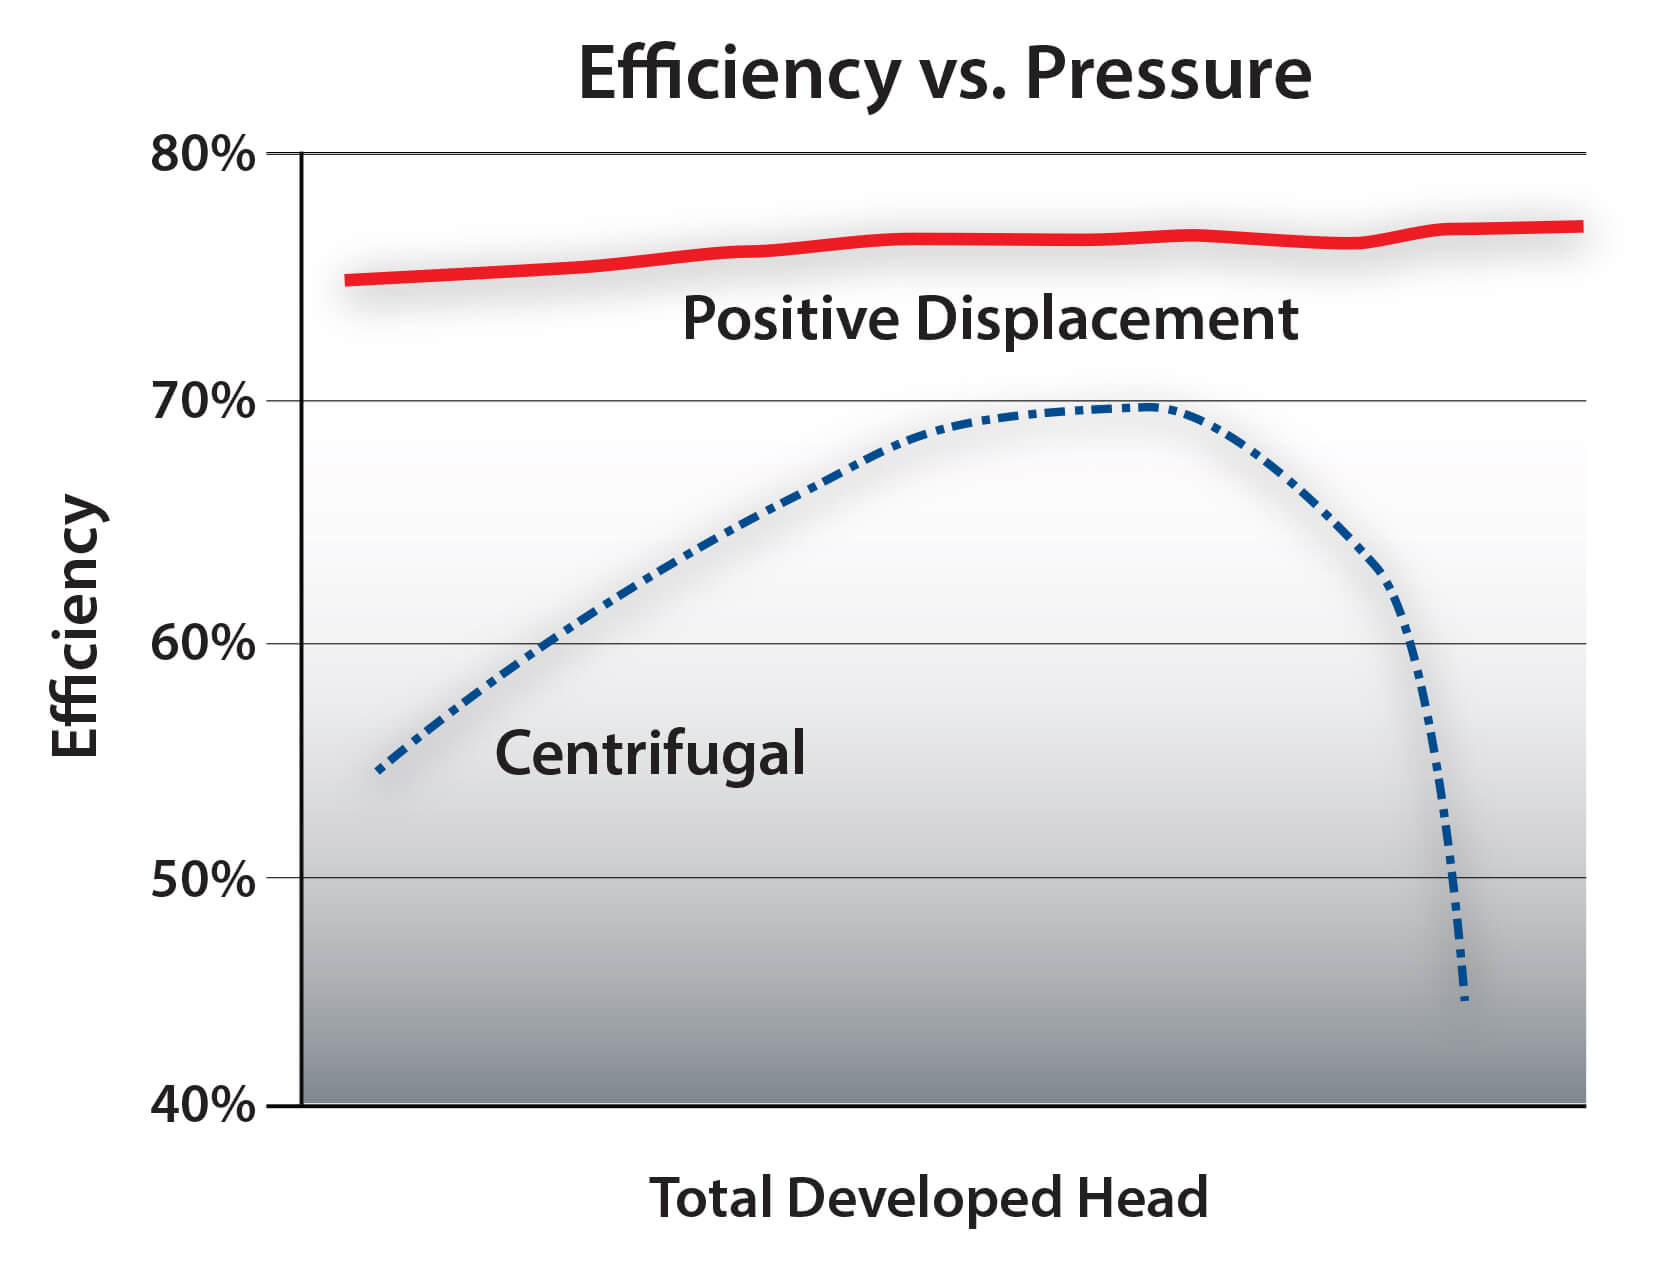 20-BLKM-1960 Inflexible Operating Range Blog Post_Efficiency vs Pressure Illustration